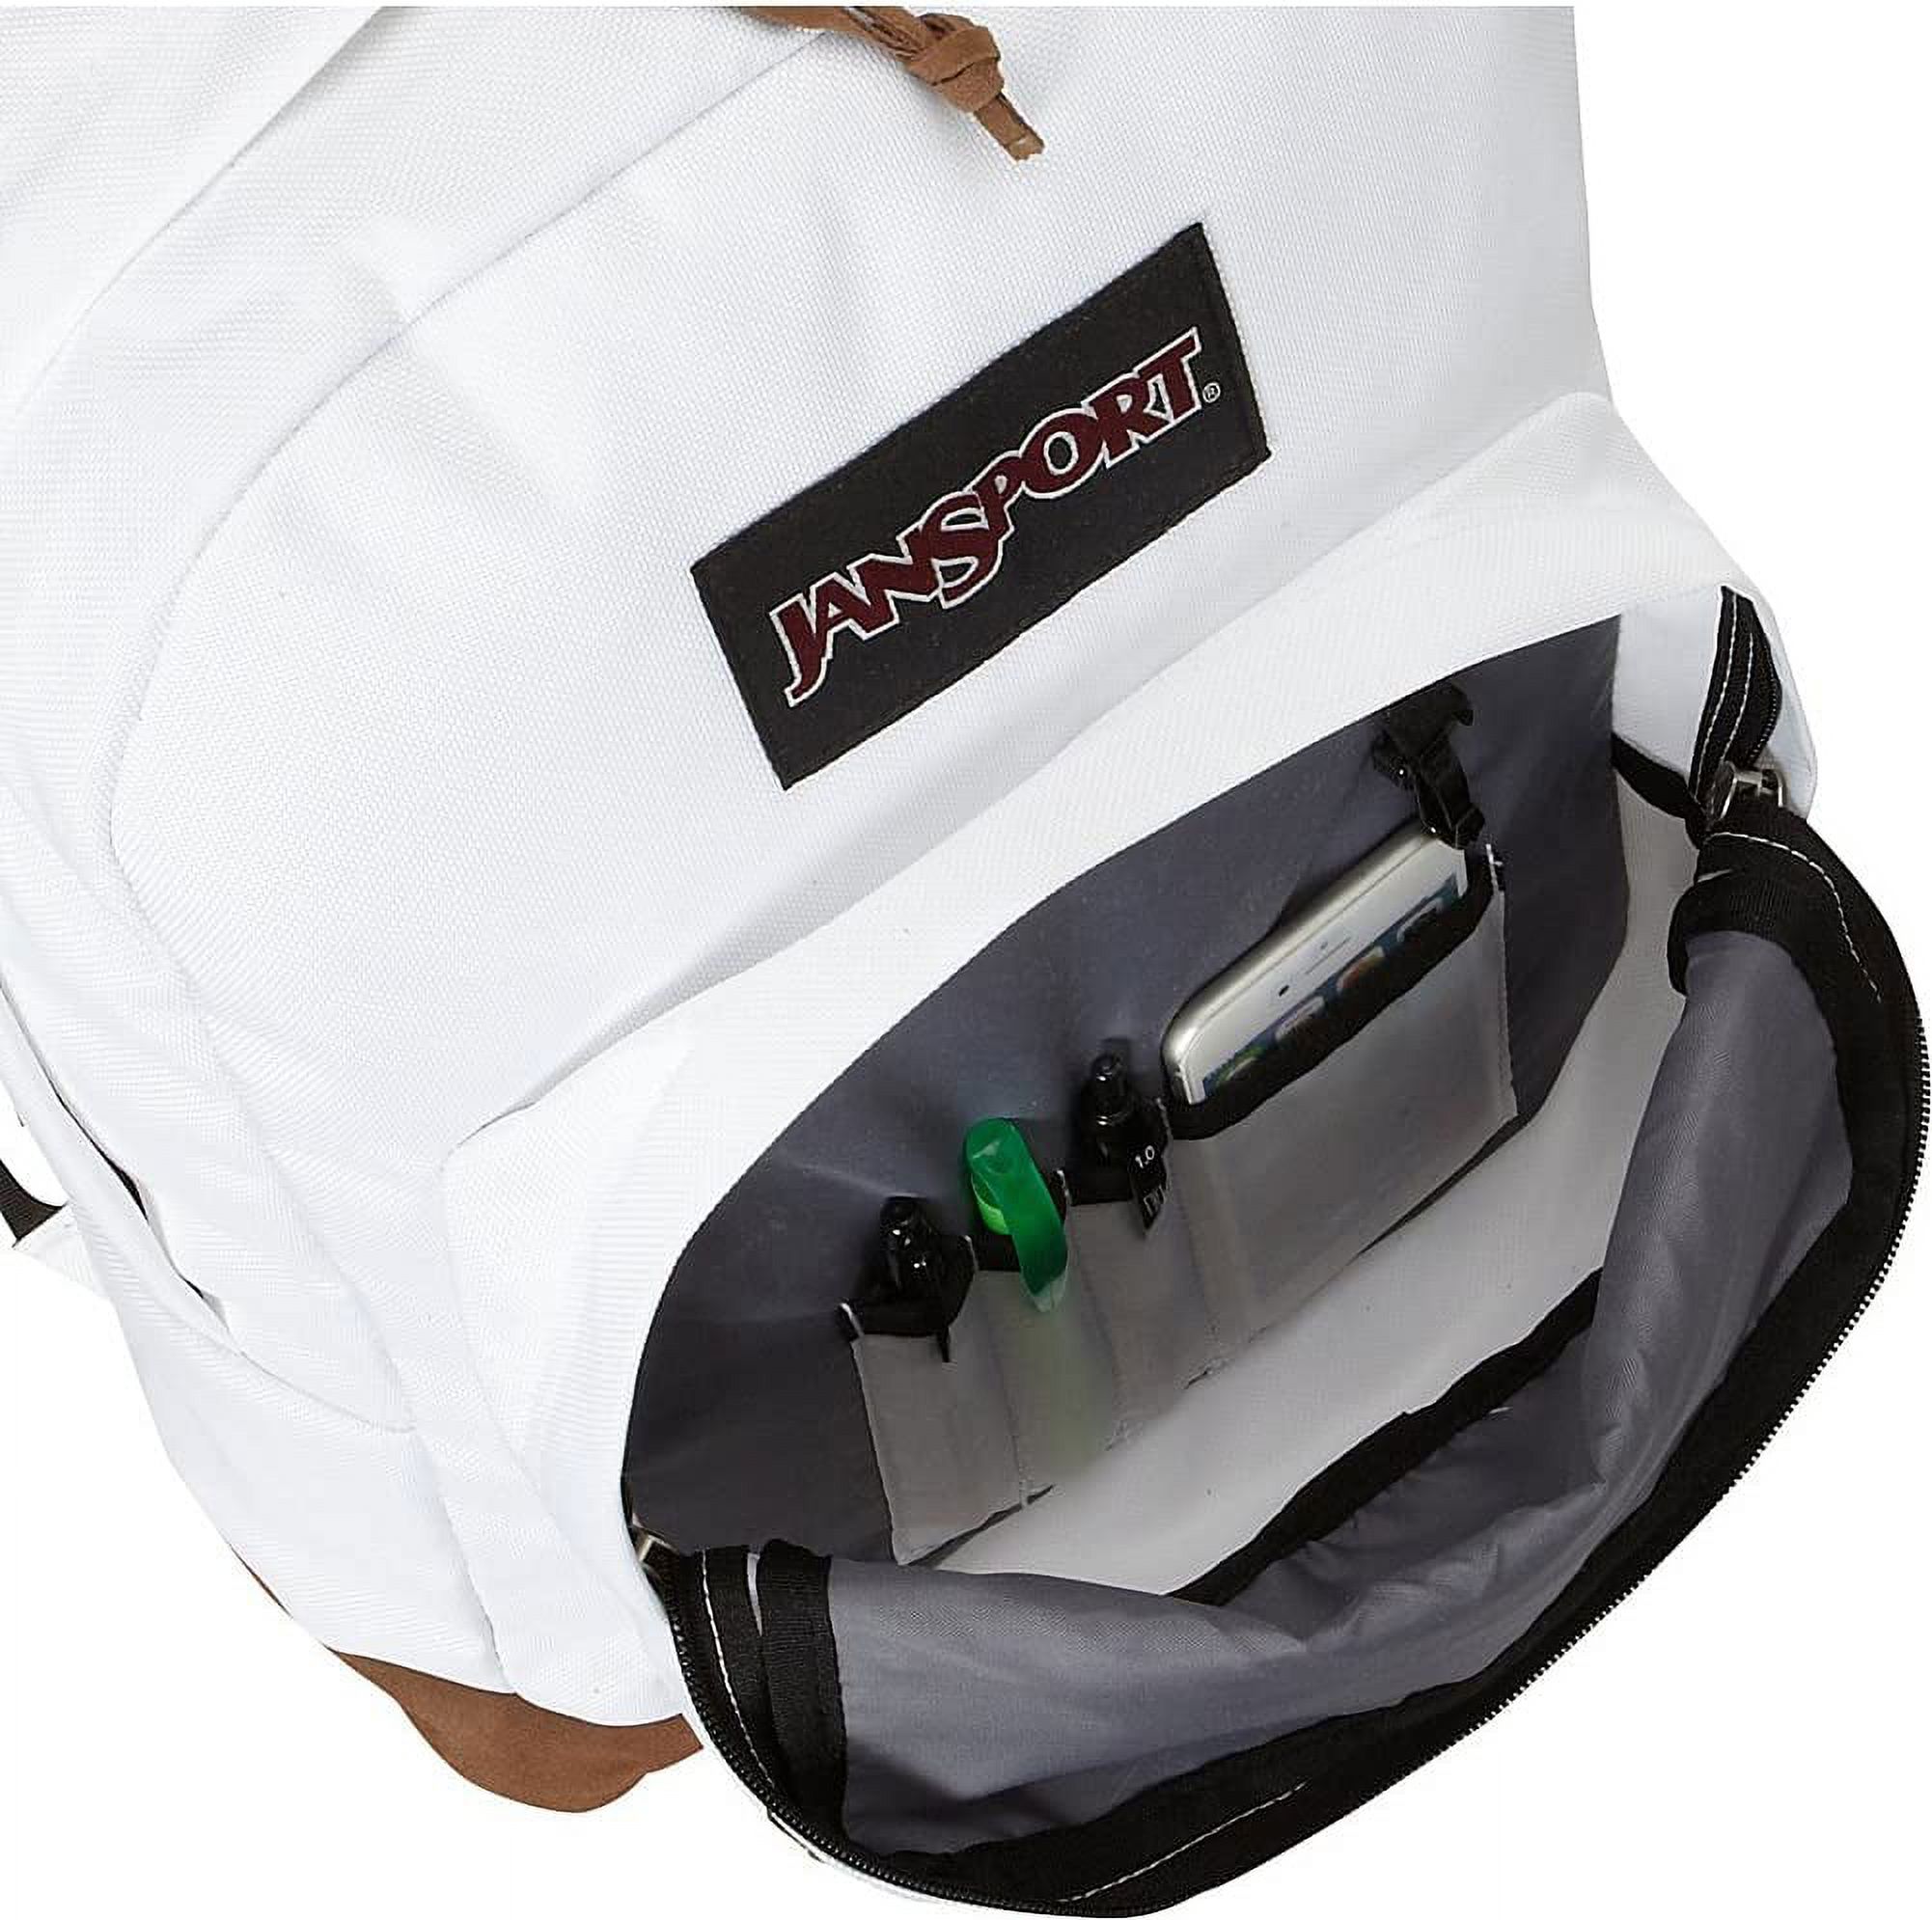 JanSport Right Pack Laptop Backpack- Sale Colors (Silver Rose Jacquard) - image 5 of 7